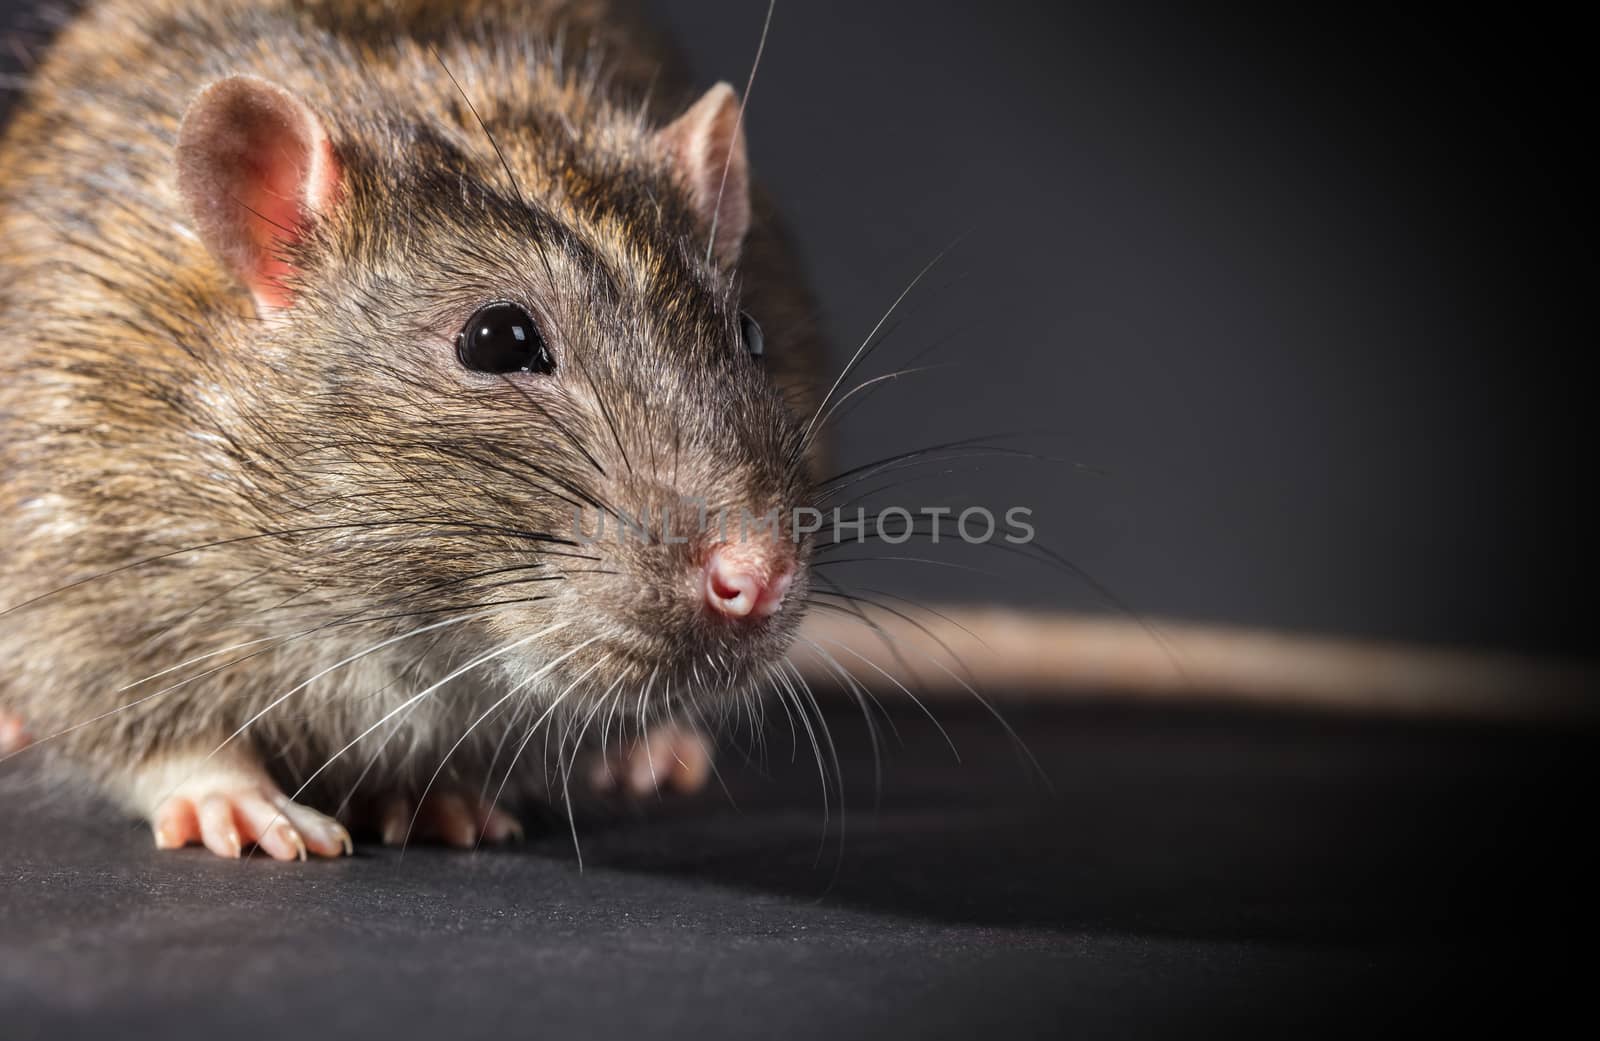 animal gray rat close-up on a black background